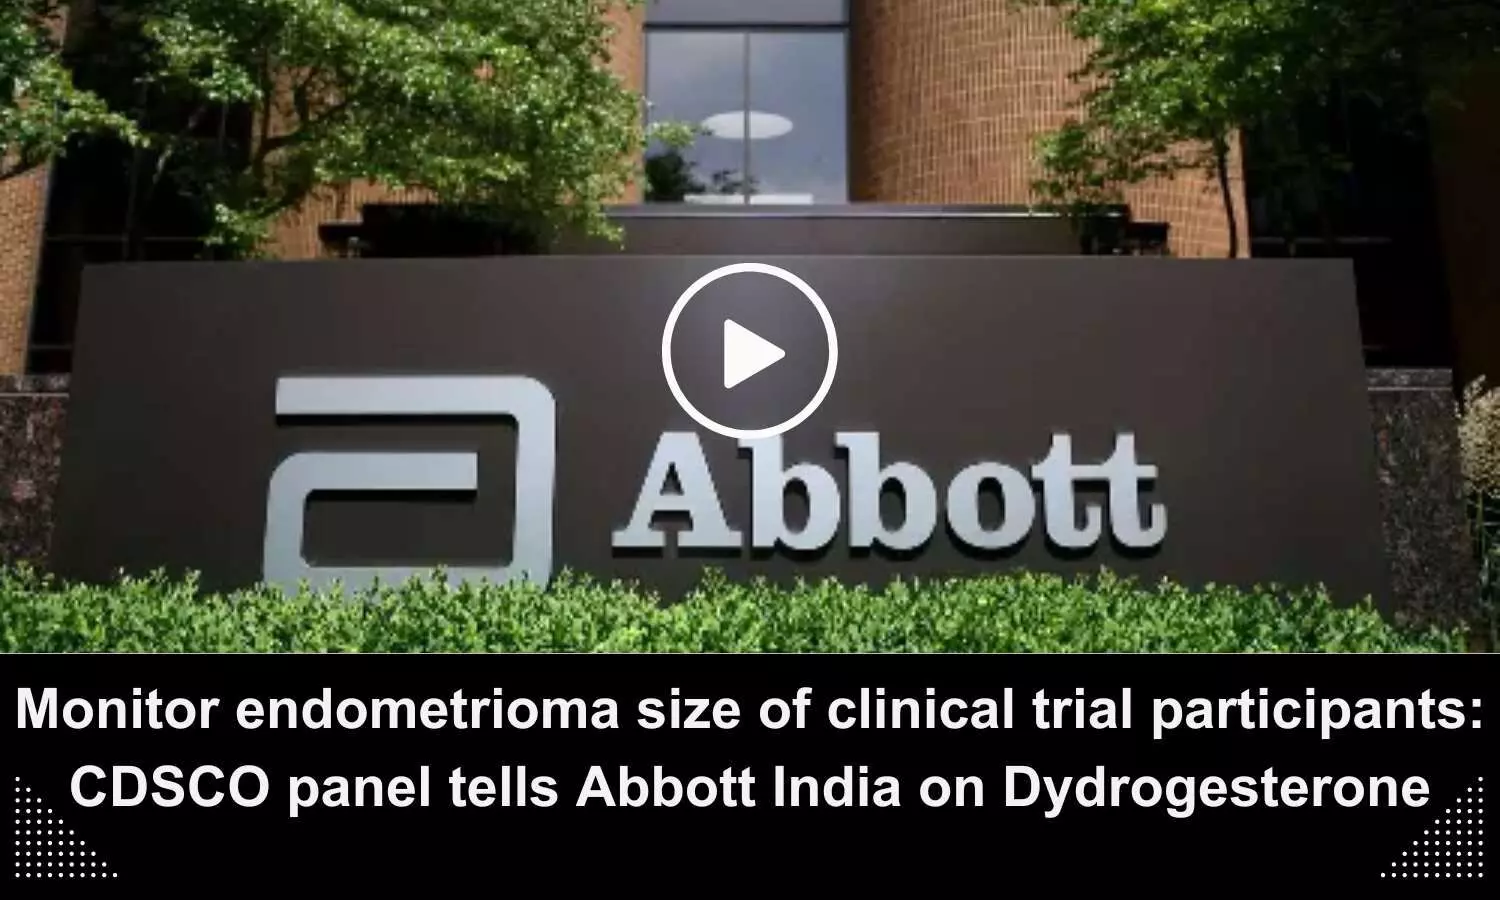 Monitor endometrioma size of participants: CDSCO panel tells Abbott India on Dydrogesterone